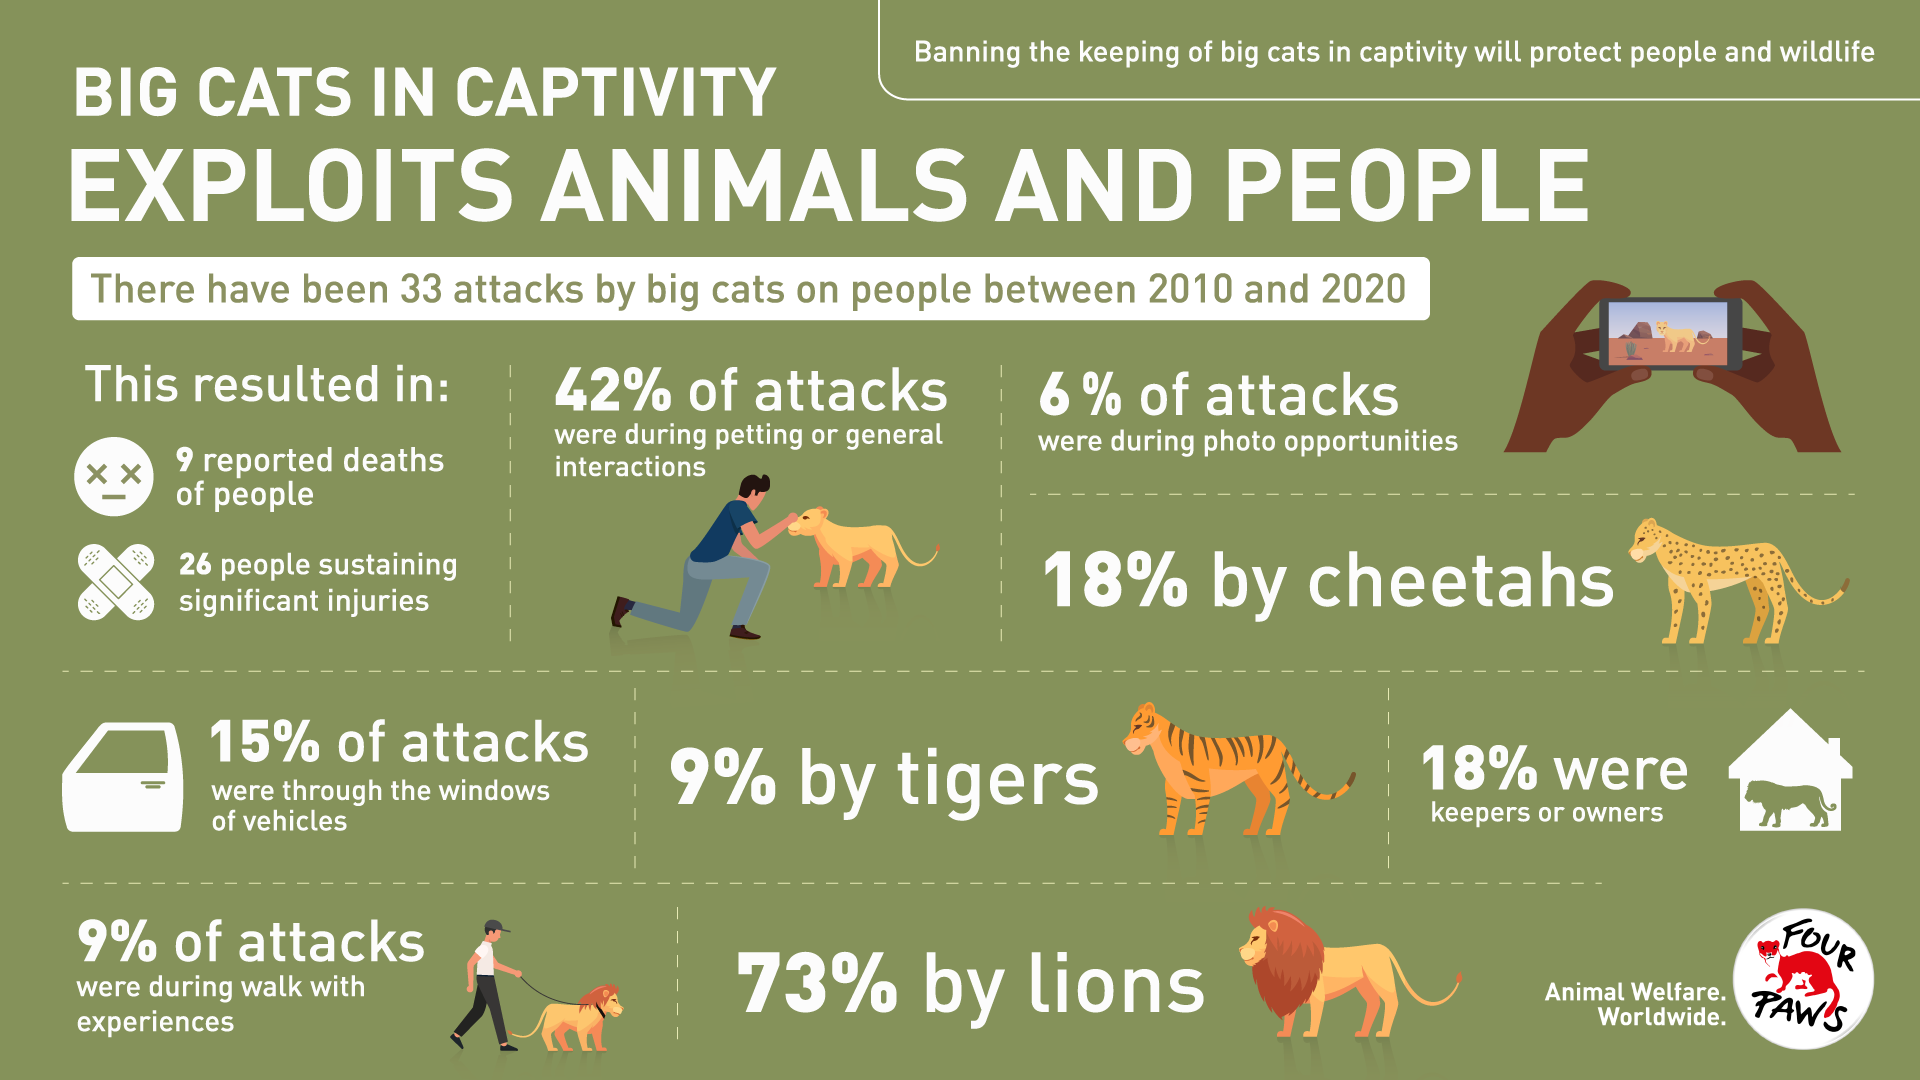 South Africa's Captive Predator Breeding Industry - FOUR PAWS International  - Animal Welfare Organisation